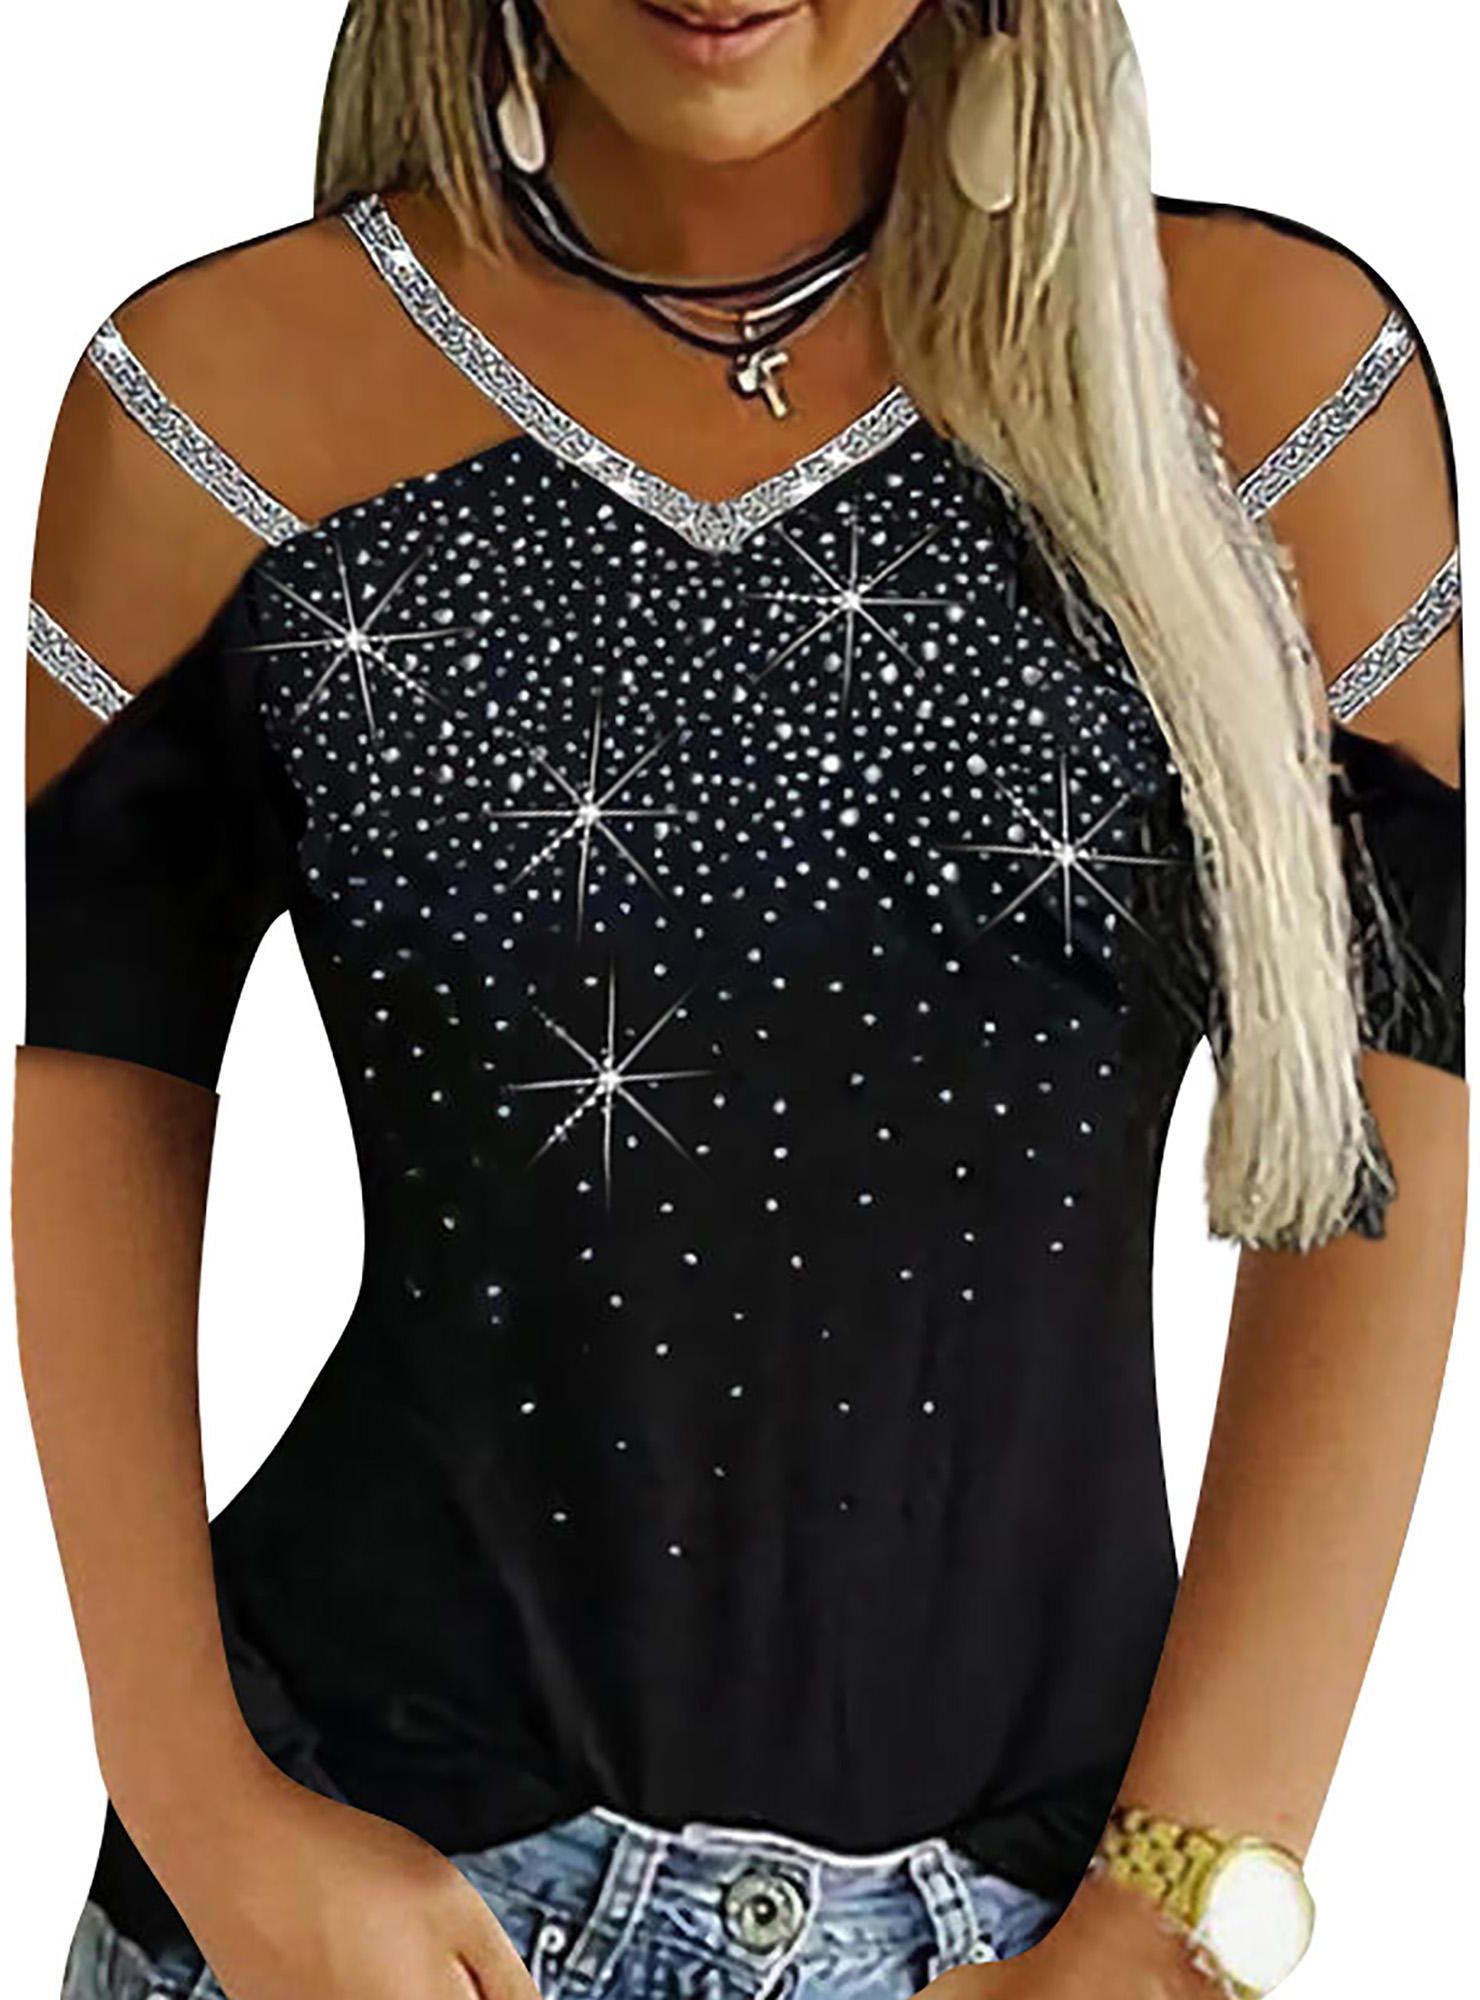 Buy Julycc Womens Casual Short Sleeve Cold Shoulder Rhinestone Blouse T Shirt Top Online in Saudi Arabia. 685057033